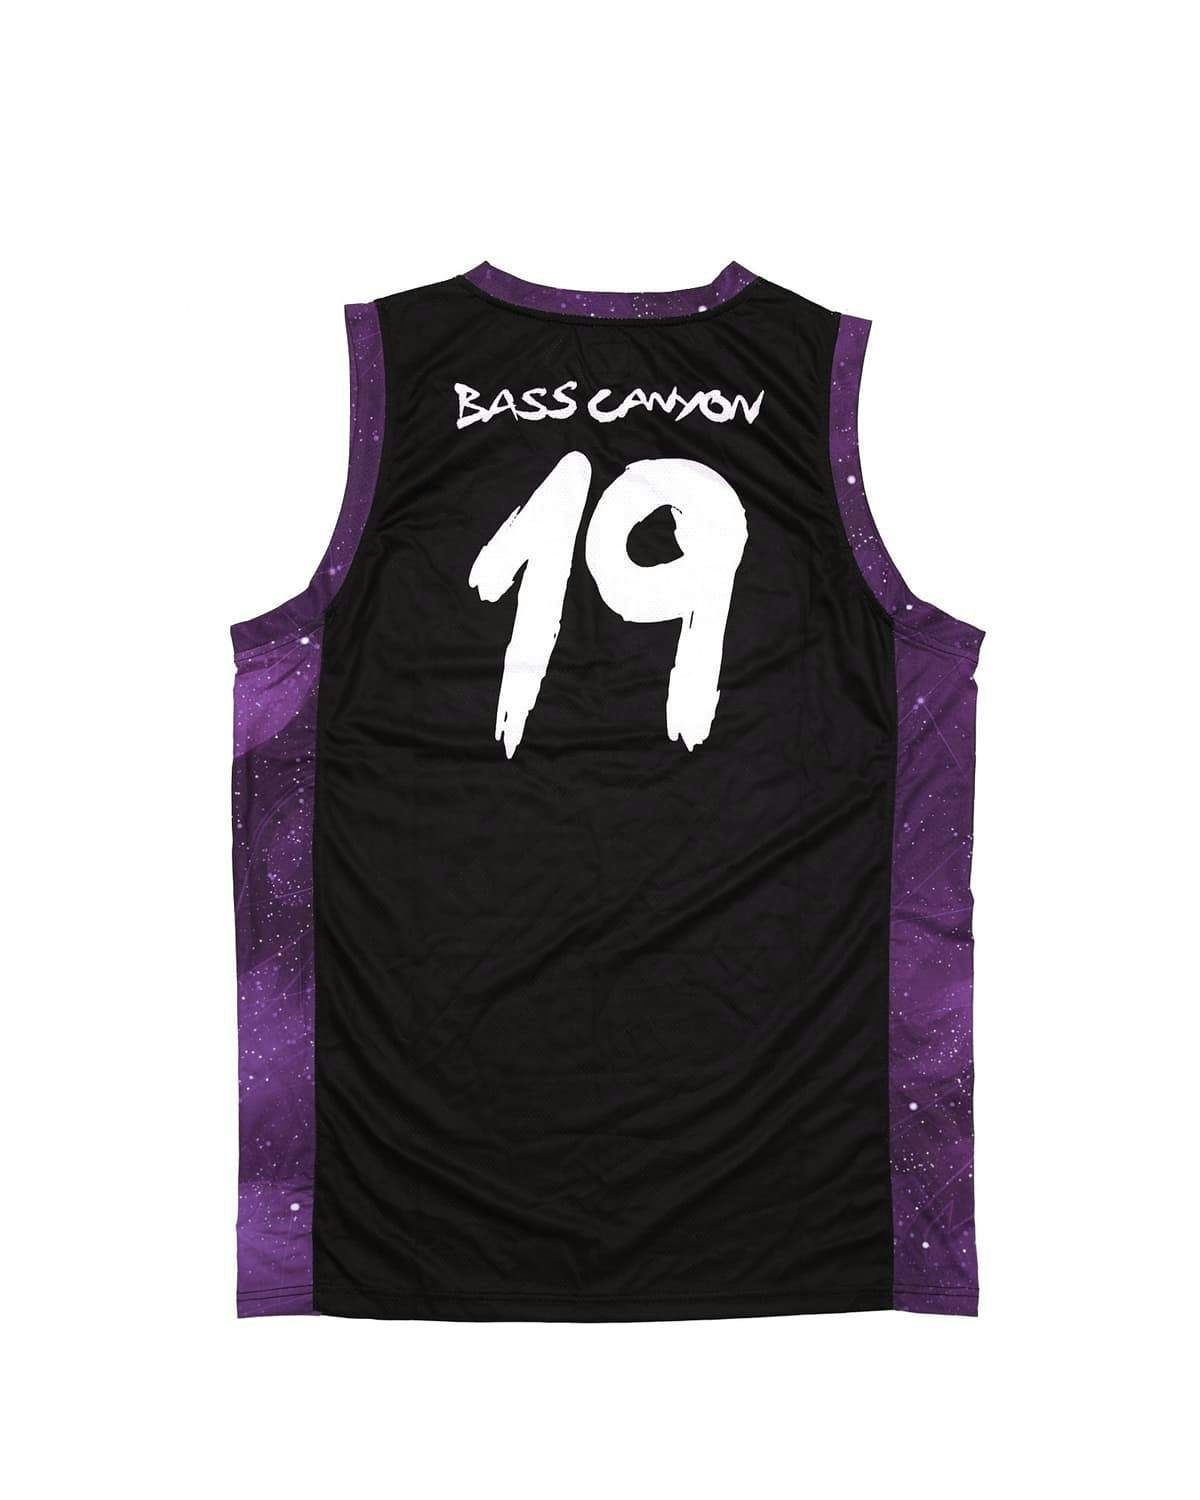 black and purple basketball jersey